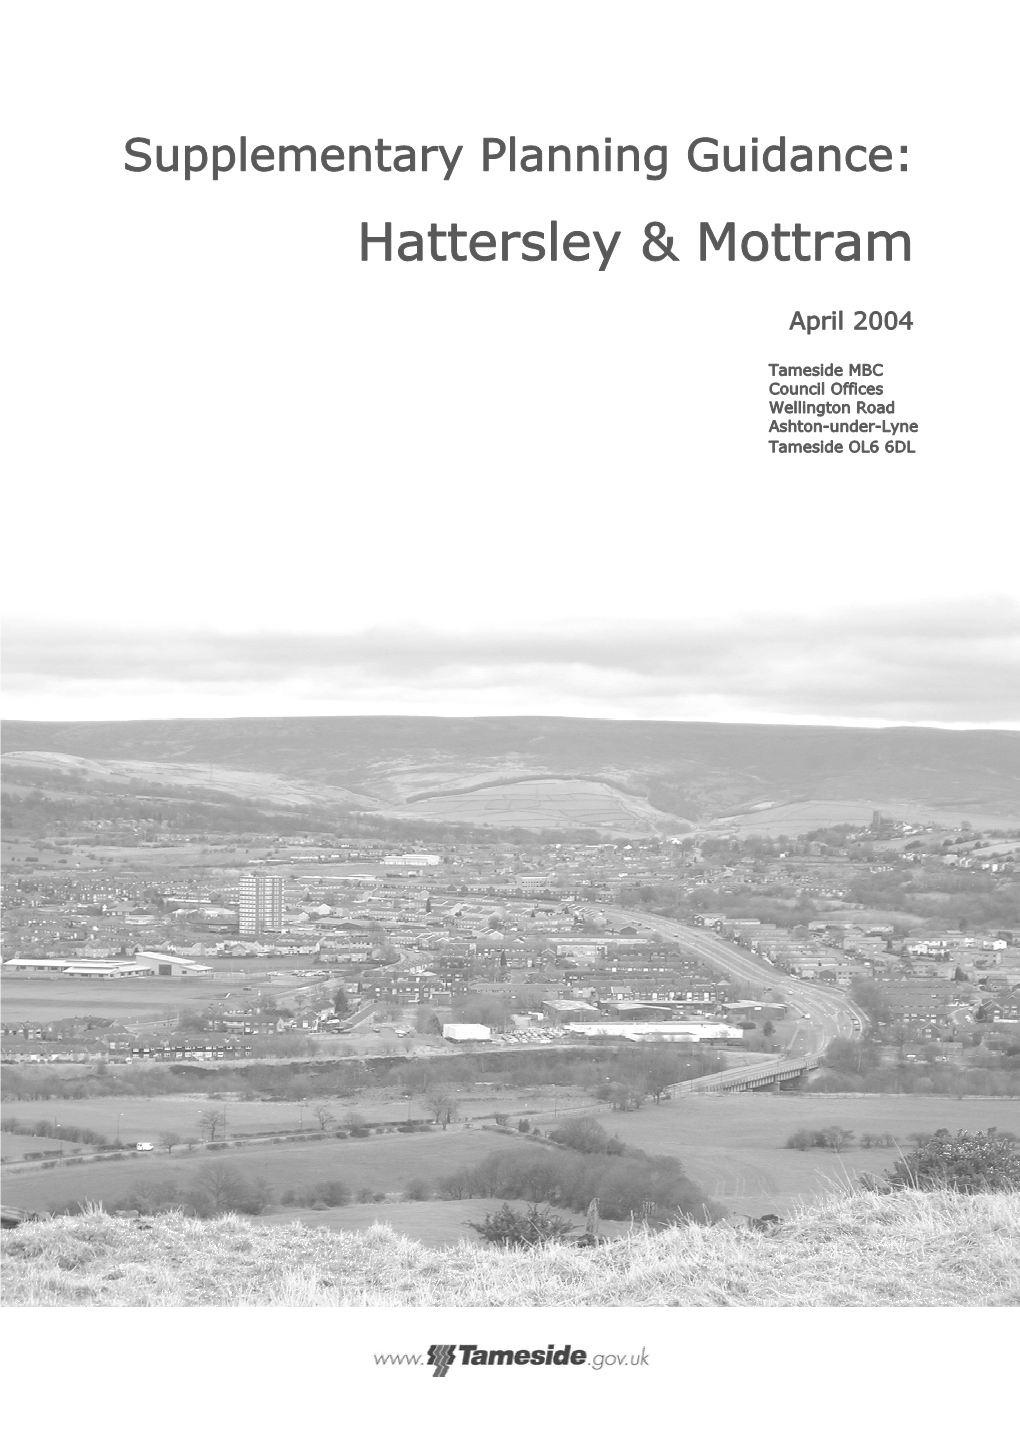 Hattersley & Mottram